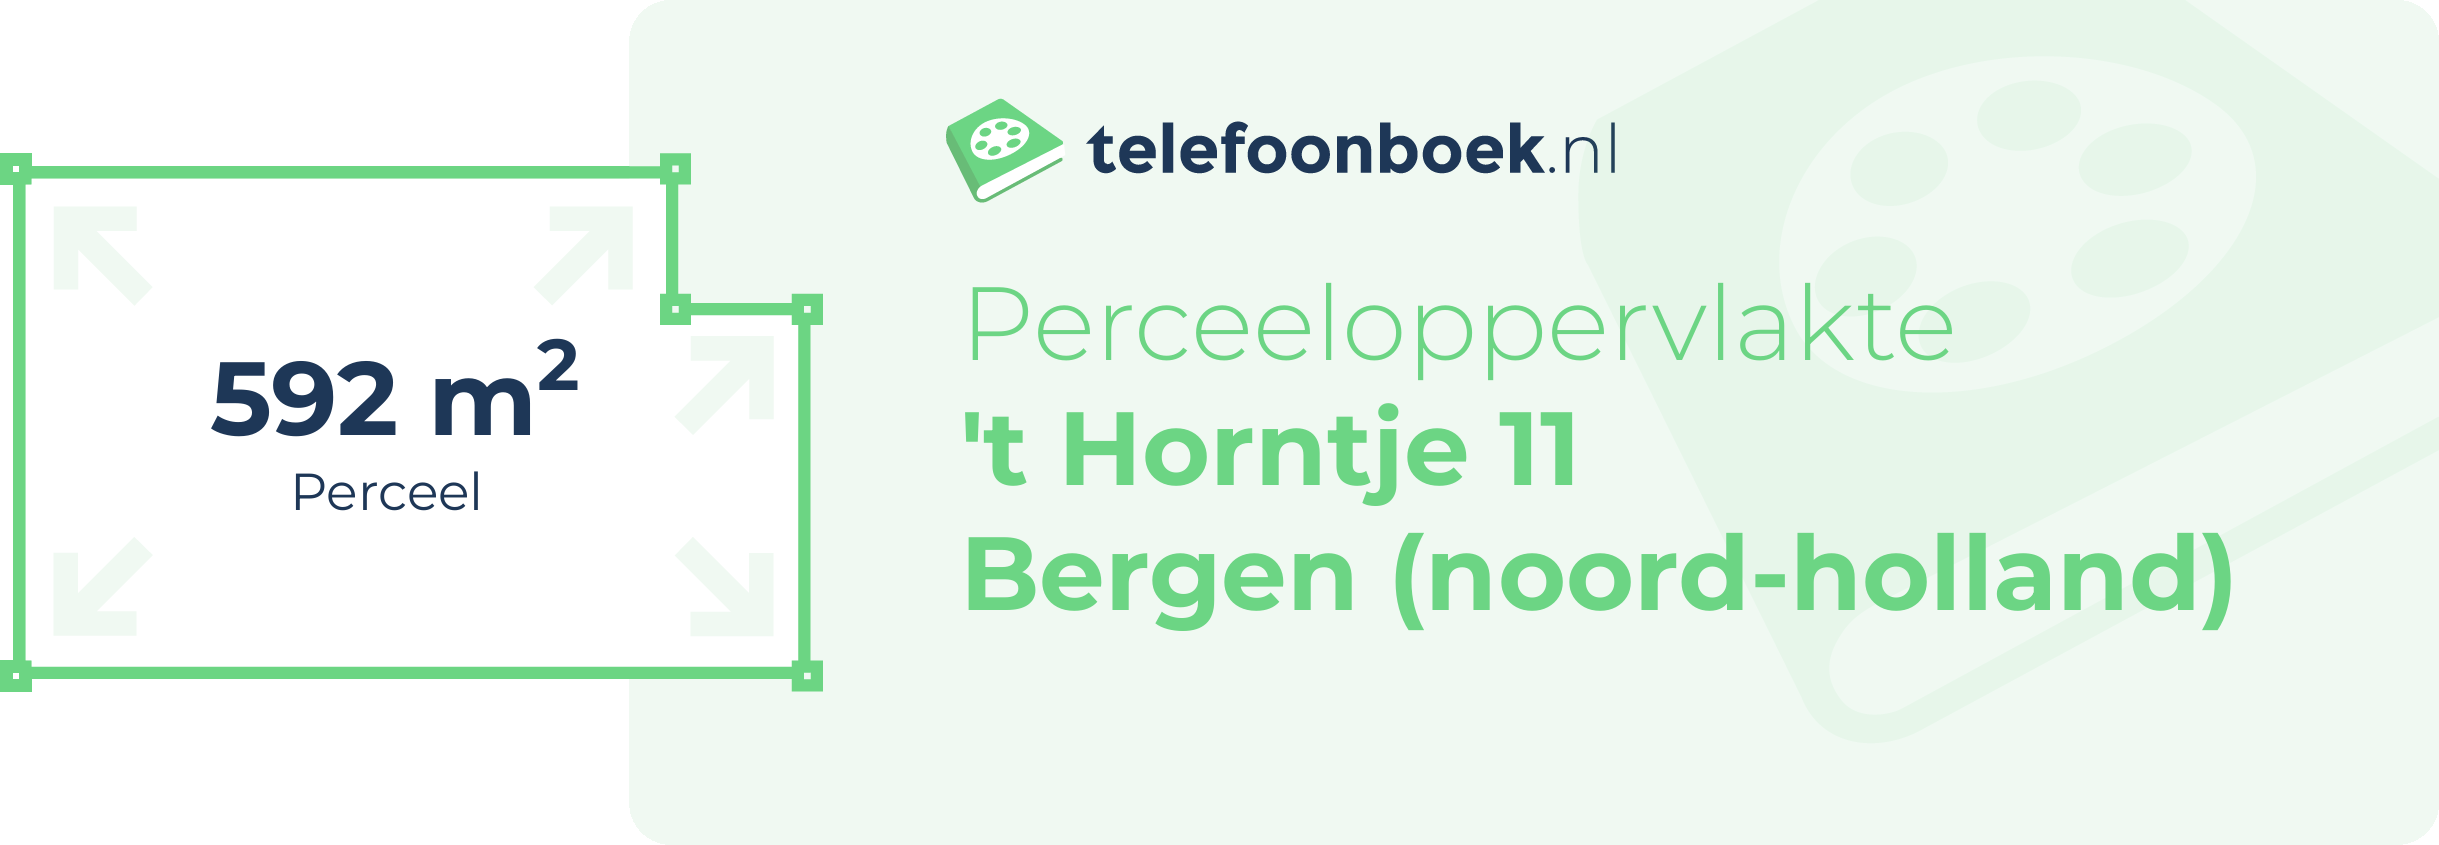 Perceeloppervlakte 't Horntje 11 Bergen (Noord-Holland)